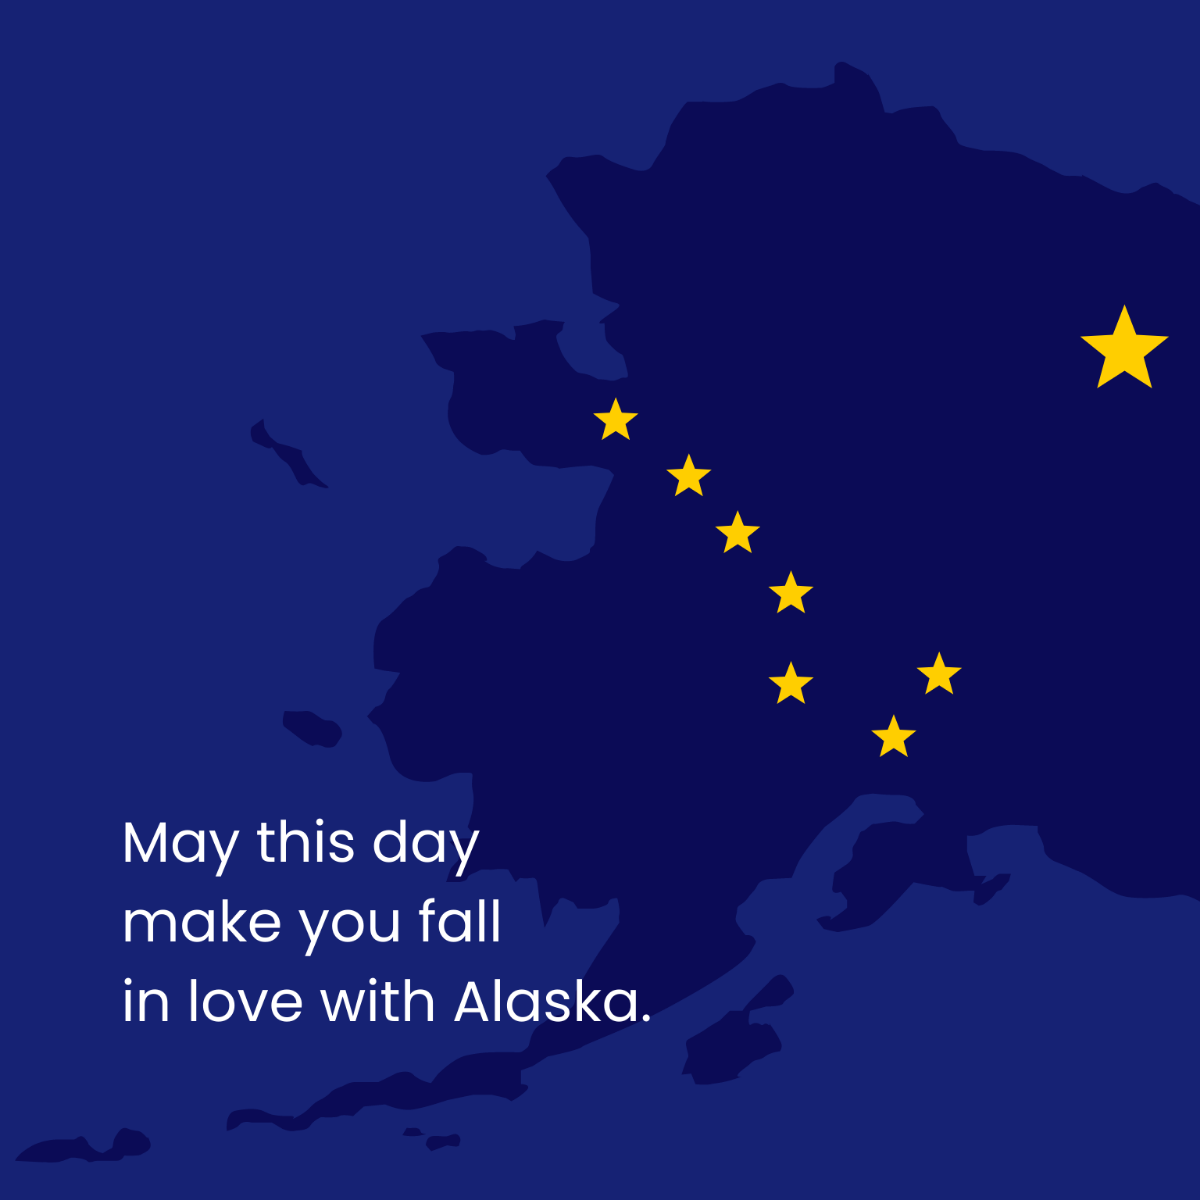 Alaska Day Wishes Vector